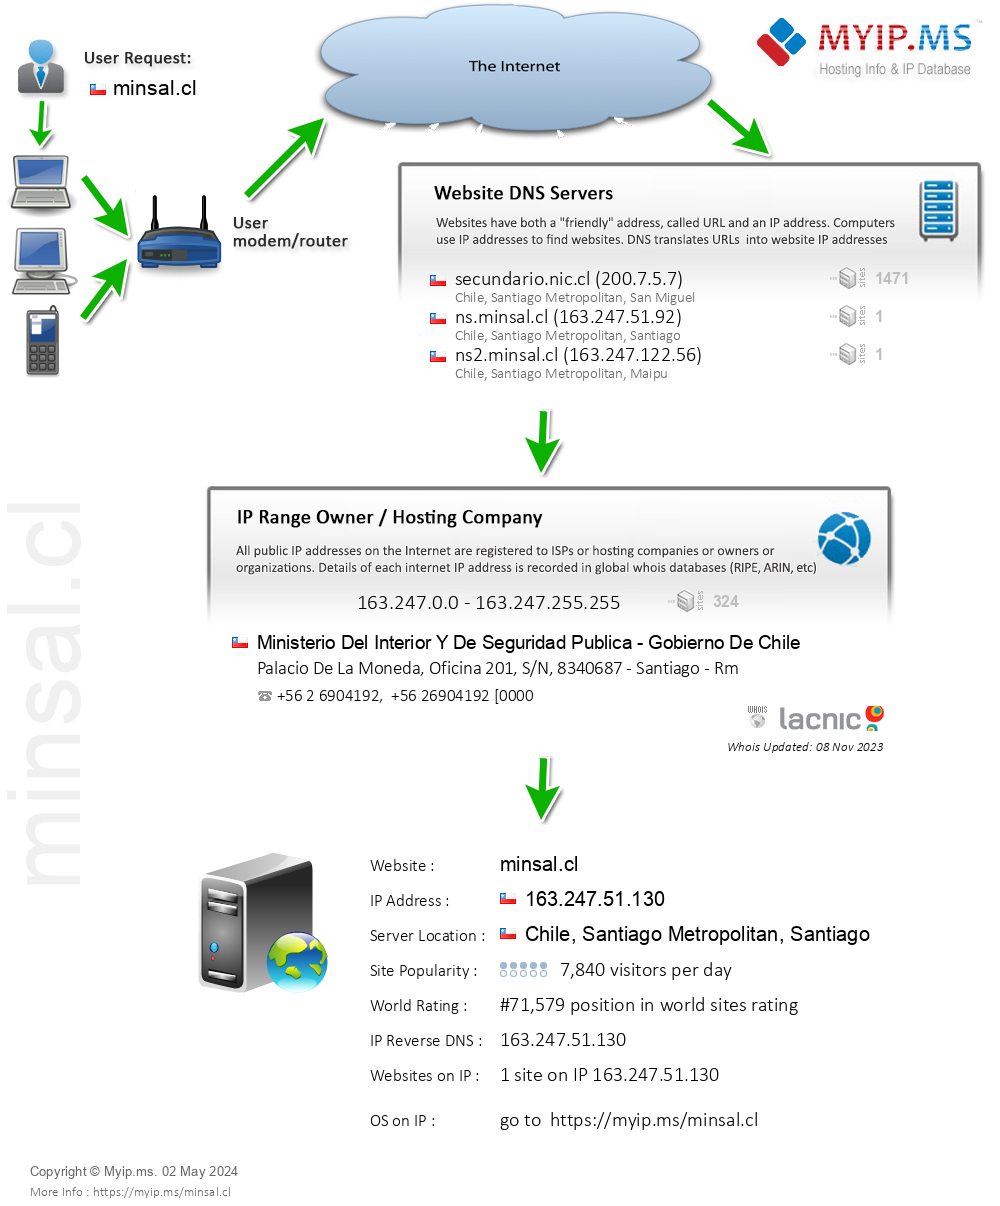 Minsal.cl - Website Hosting Visual IP Diagram